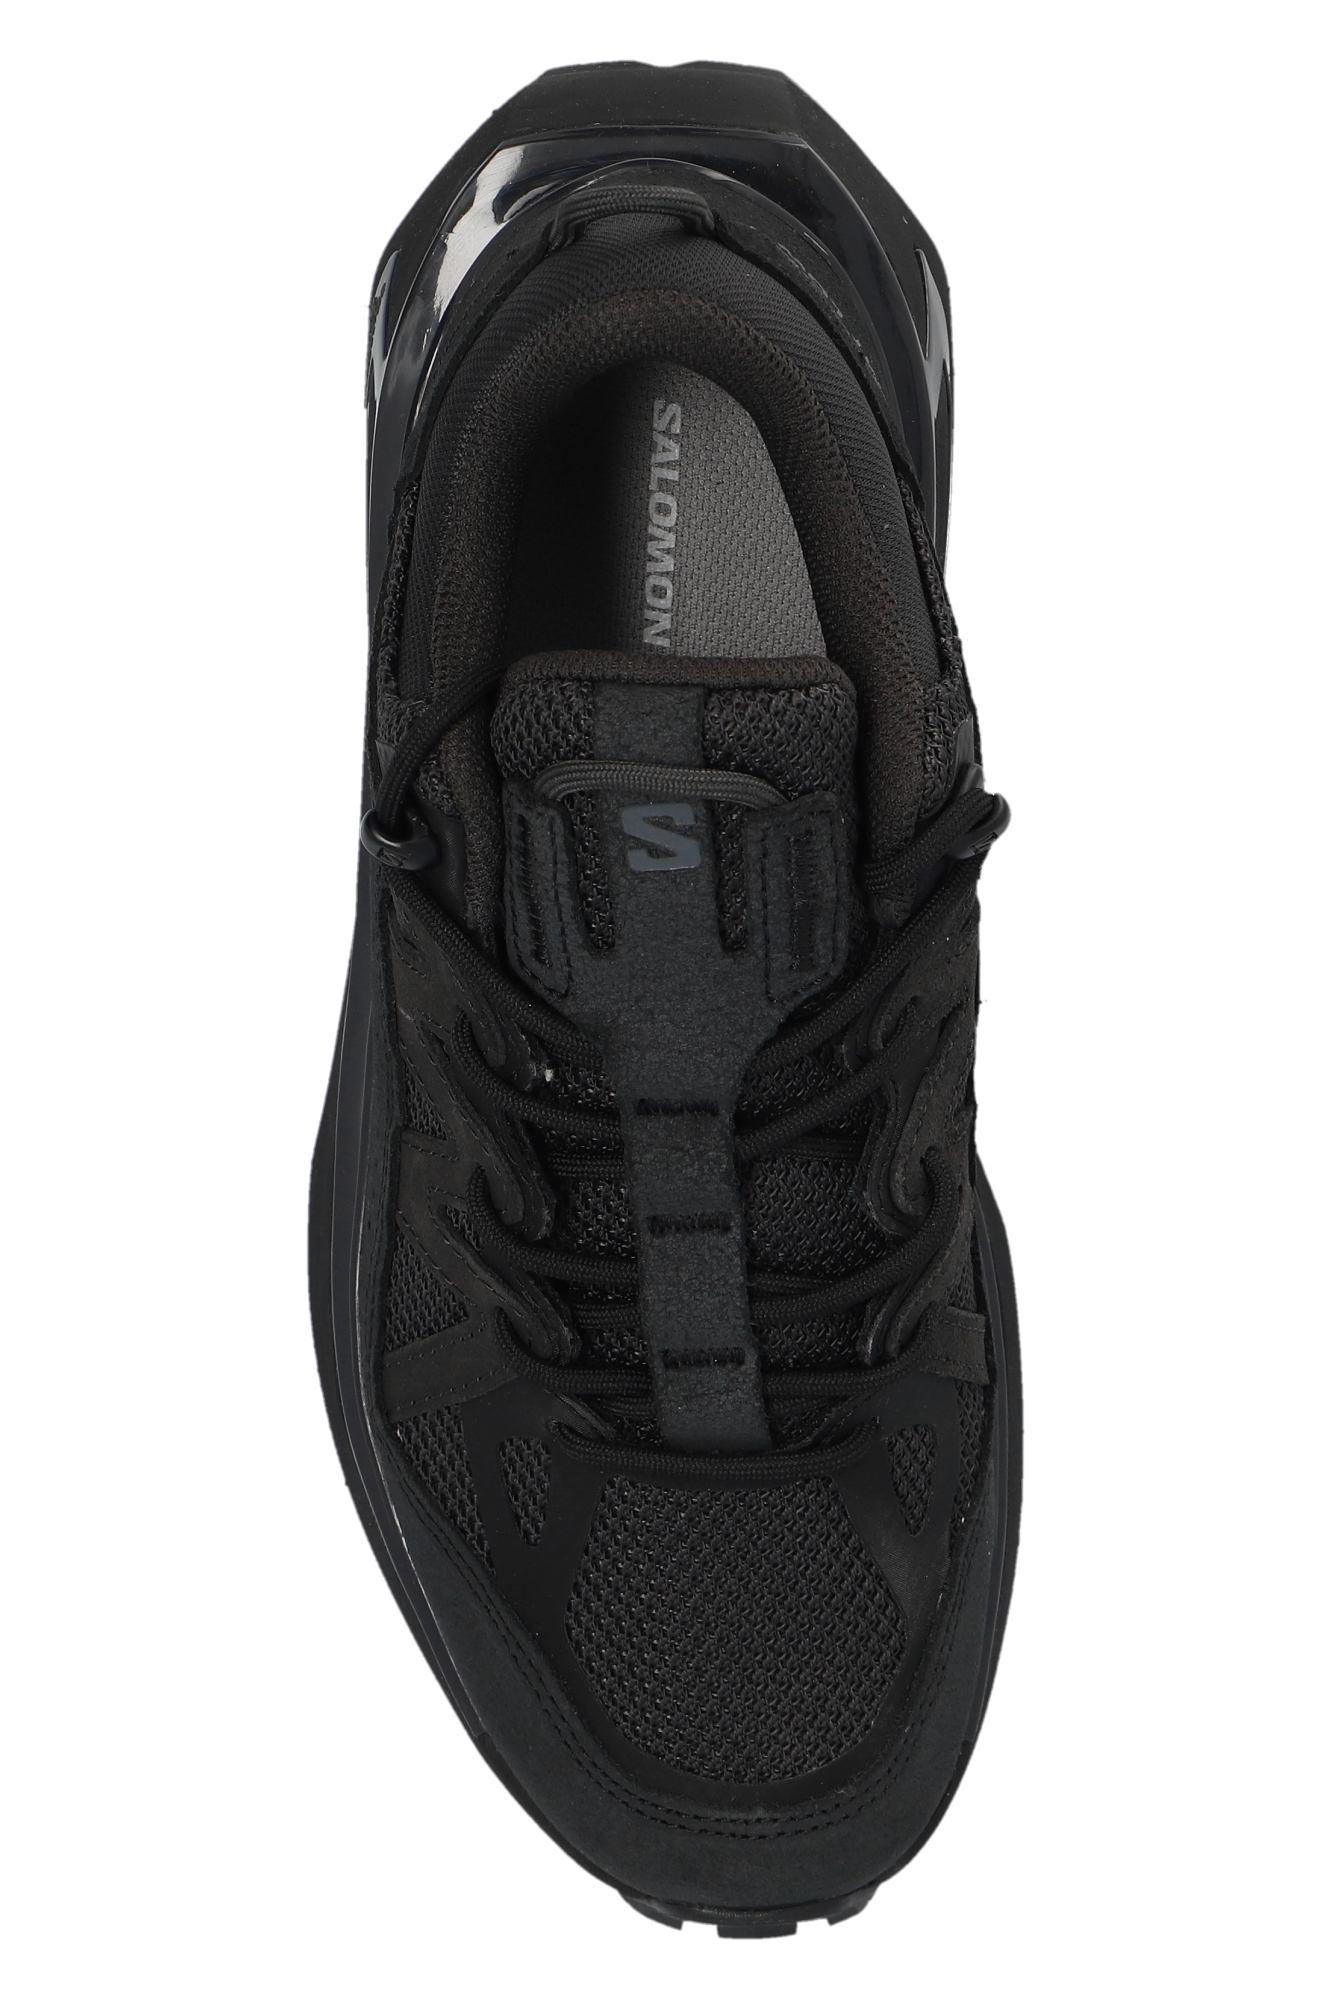 Salomon Odyssey Hiking Shoes - Men's, — Mens Shoe Size: 8.5 US